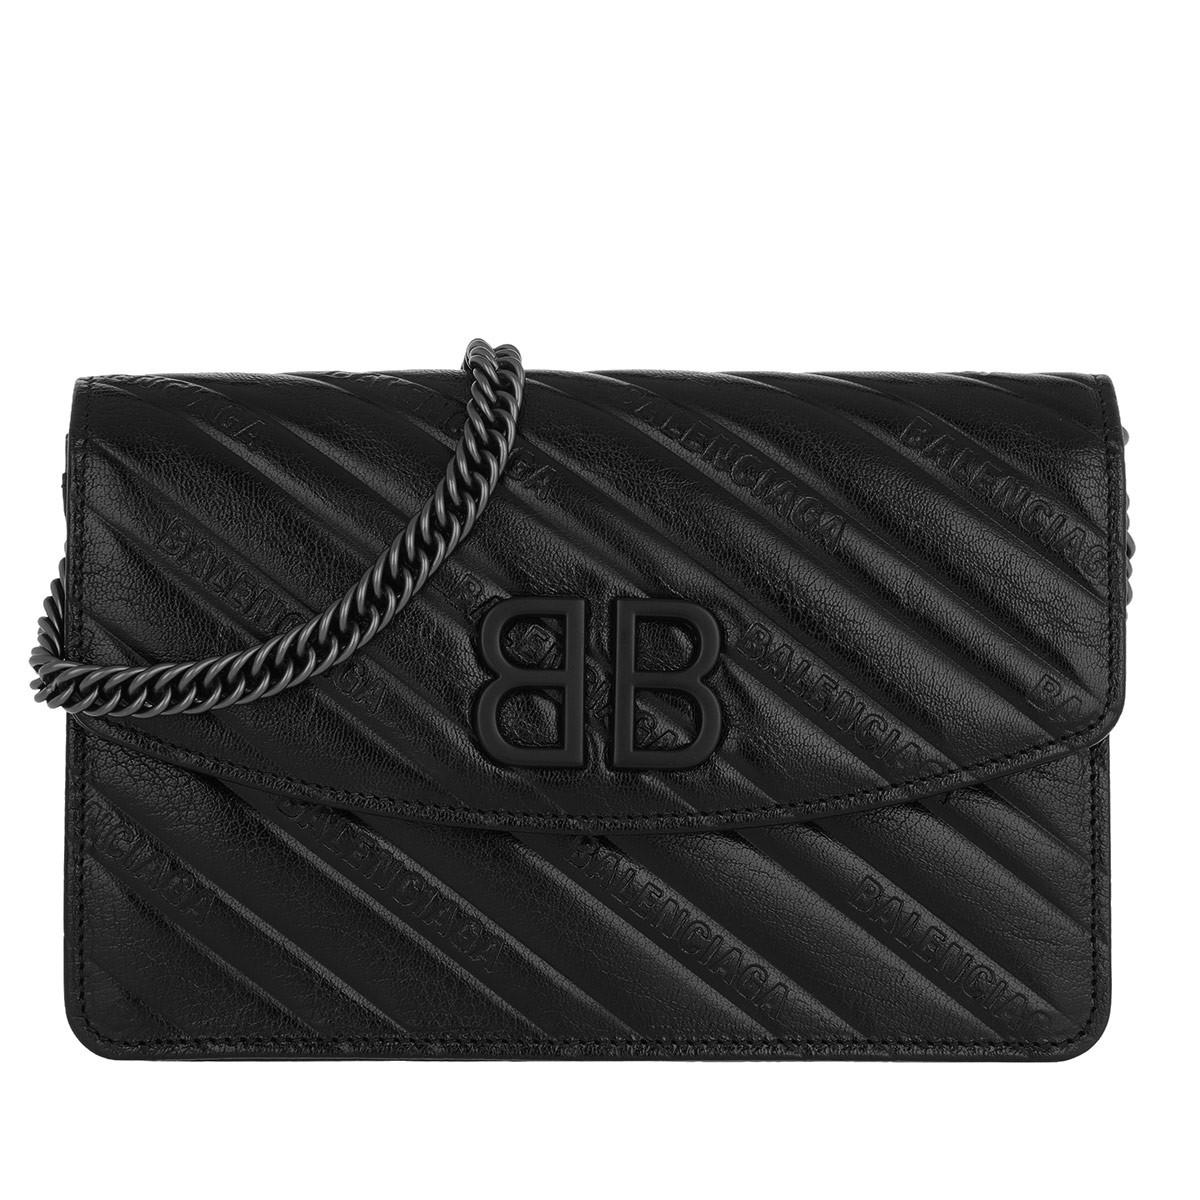 balenciaga wallet on chain black